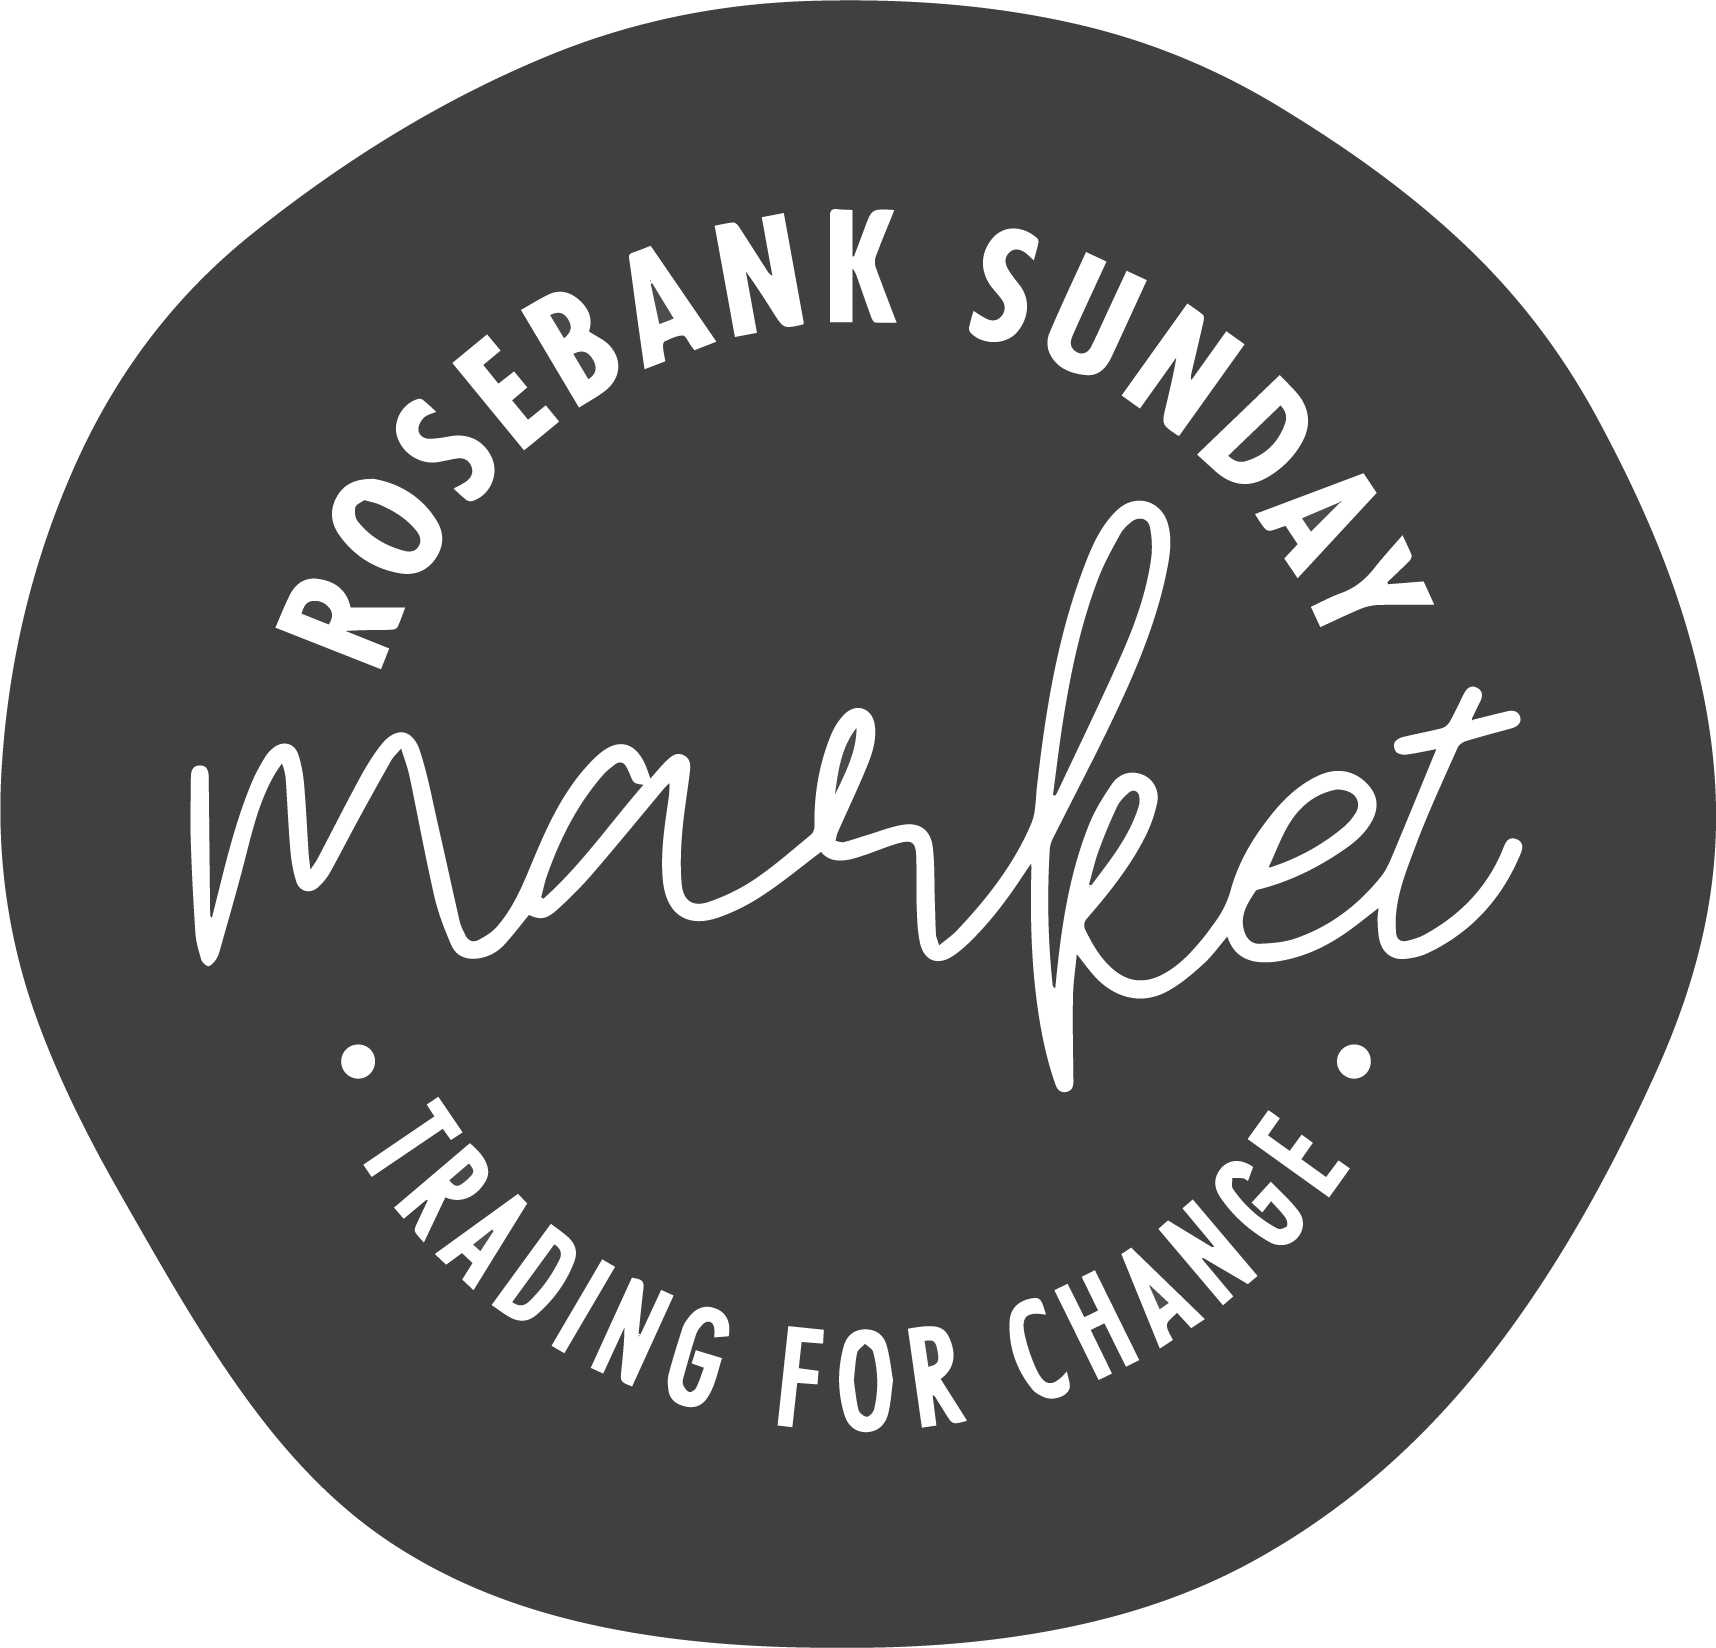 Rosebank Sunday Market – Rosebank Mall Rooftop Market Johannesburg